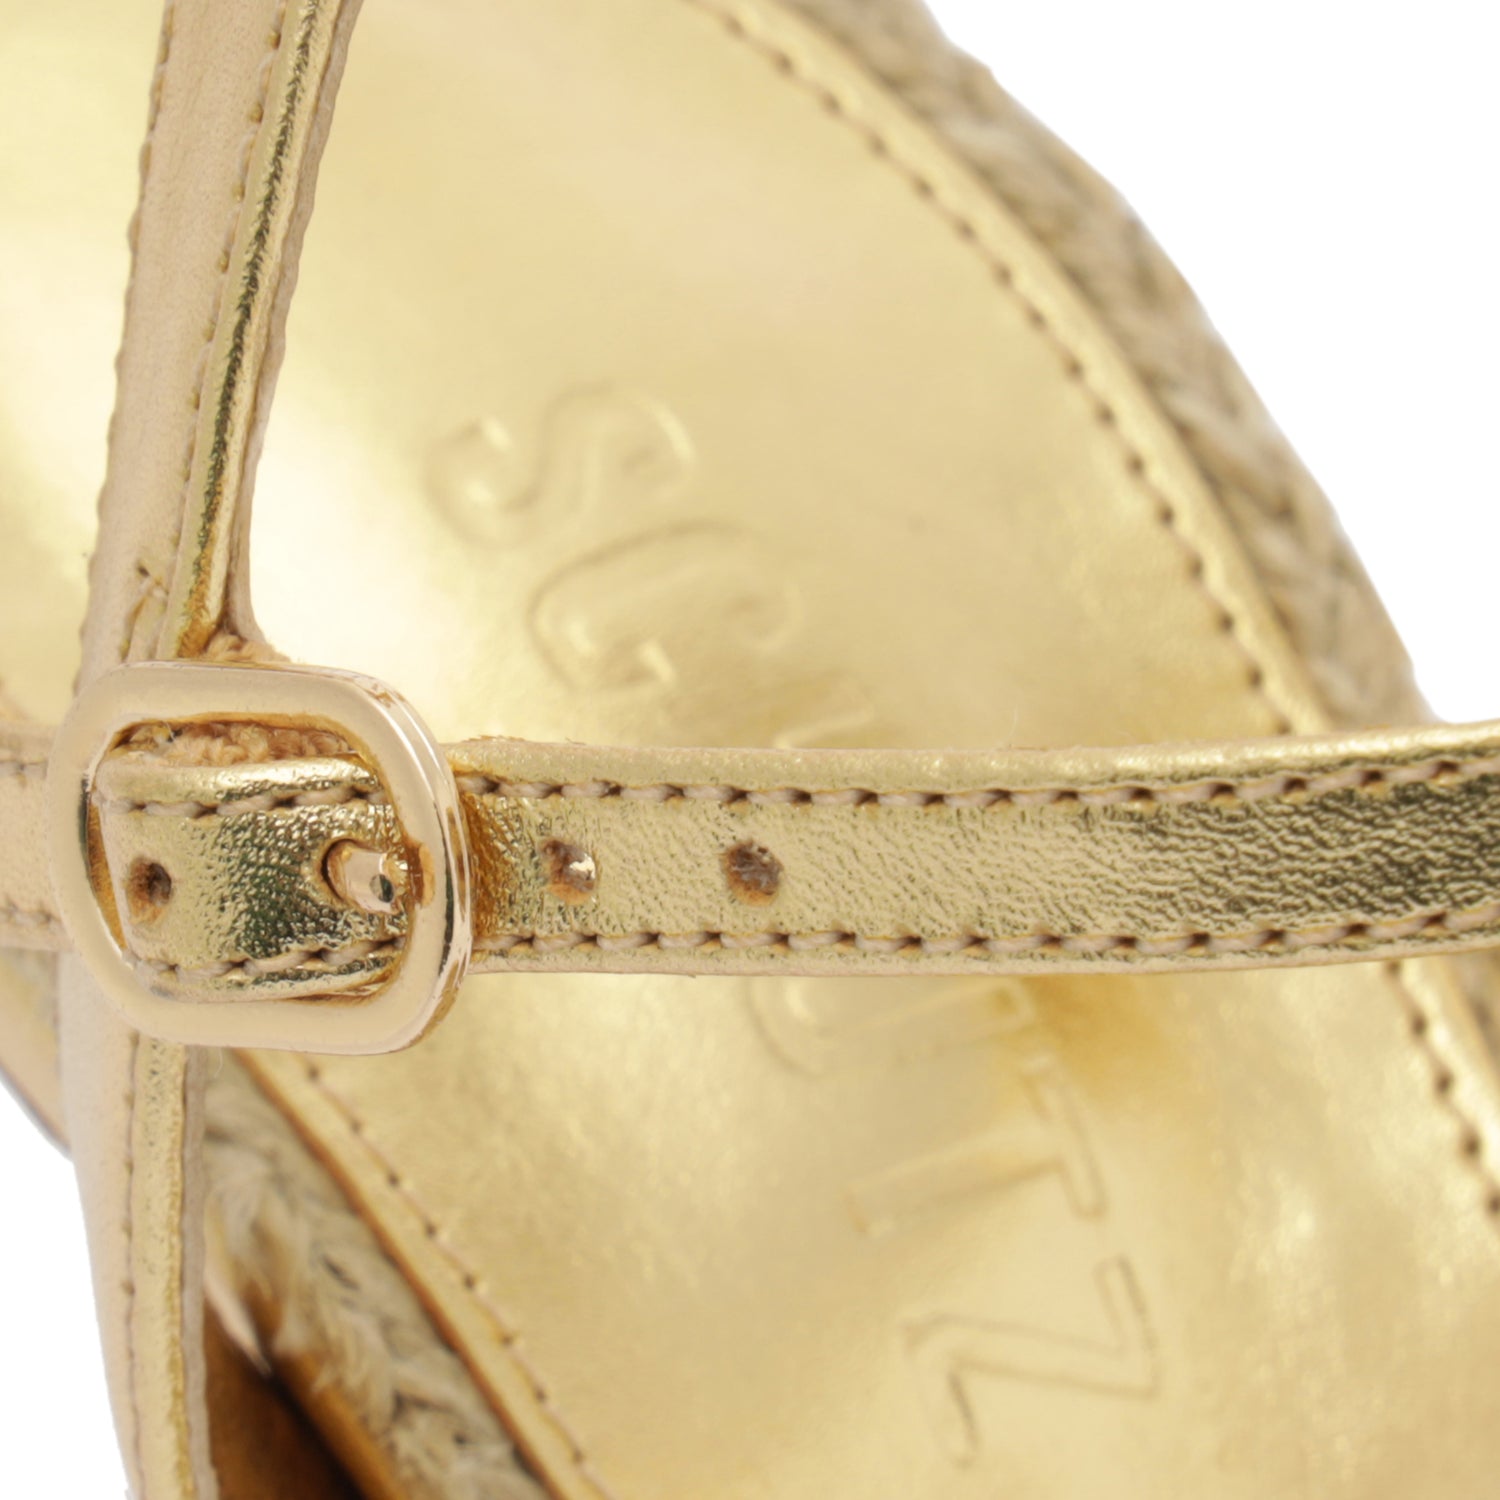 Marbella Metallic Leather Sandal Gold Metallic Leather